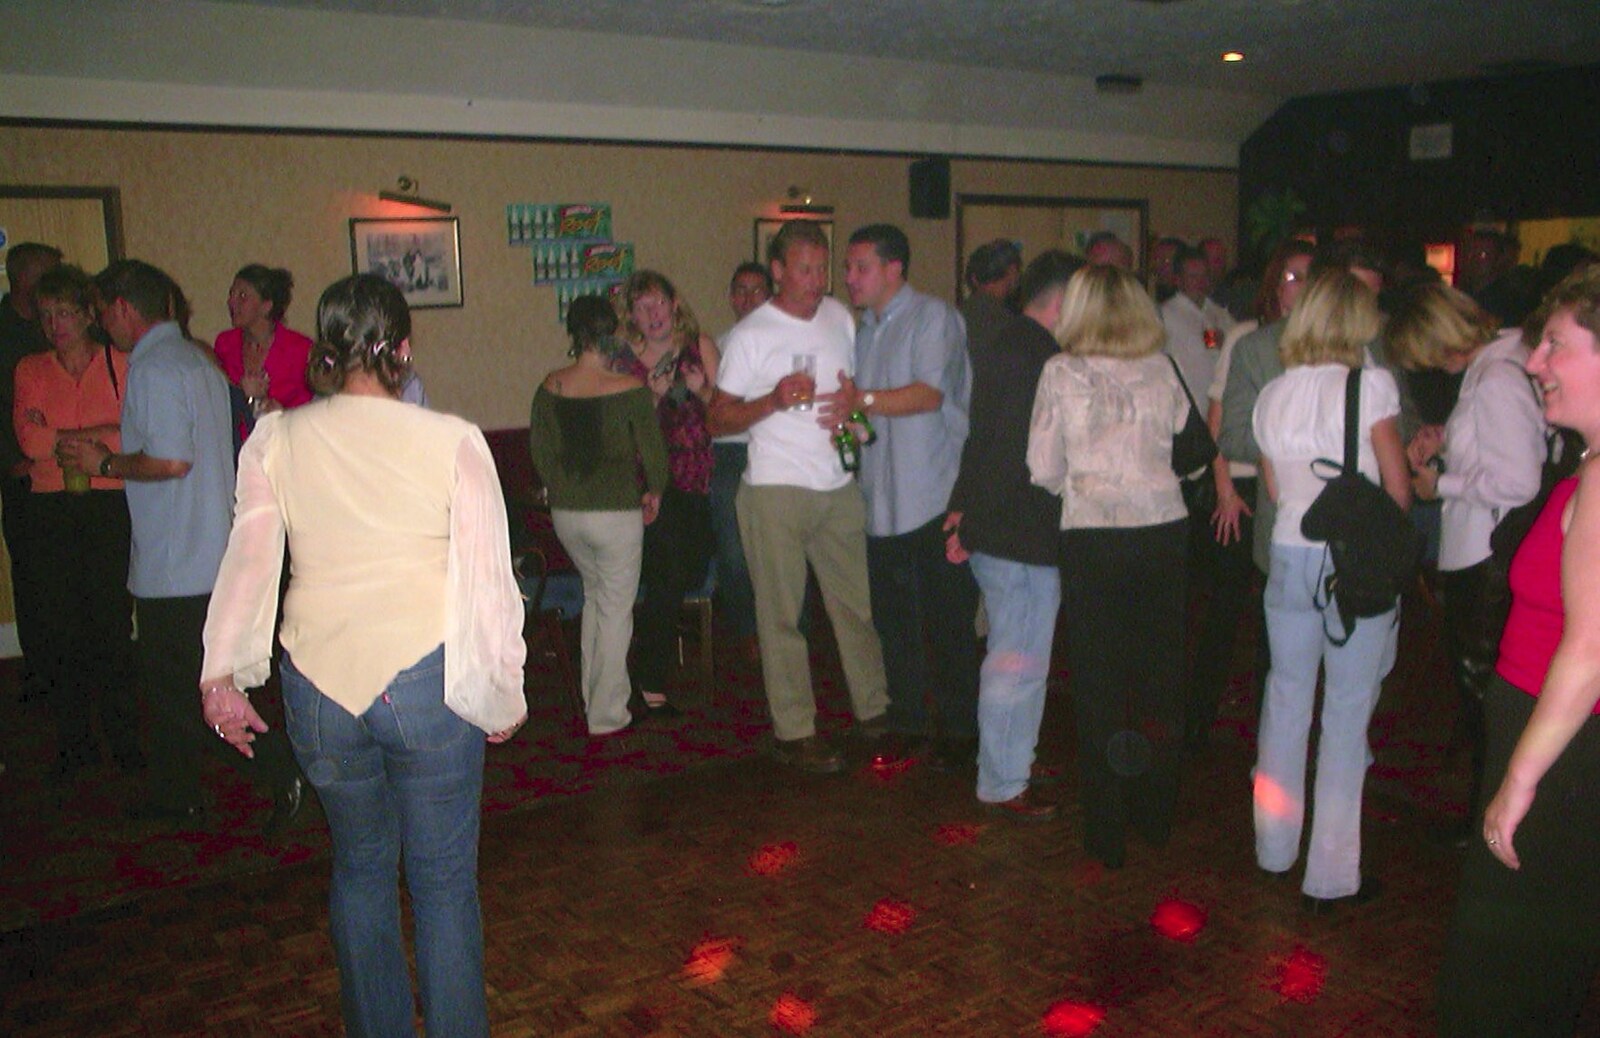 Mingling on the dance floor from Arnewood School Class of '83 Reunion, Fawcett's Field, New Milton - 2nd November 2002